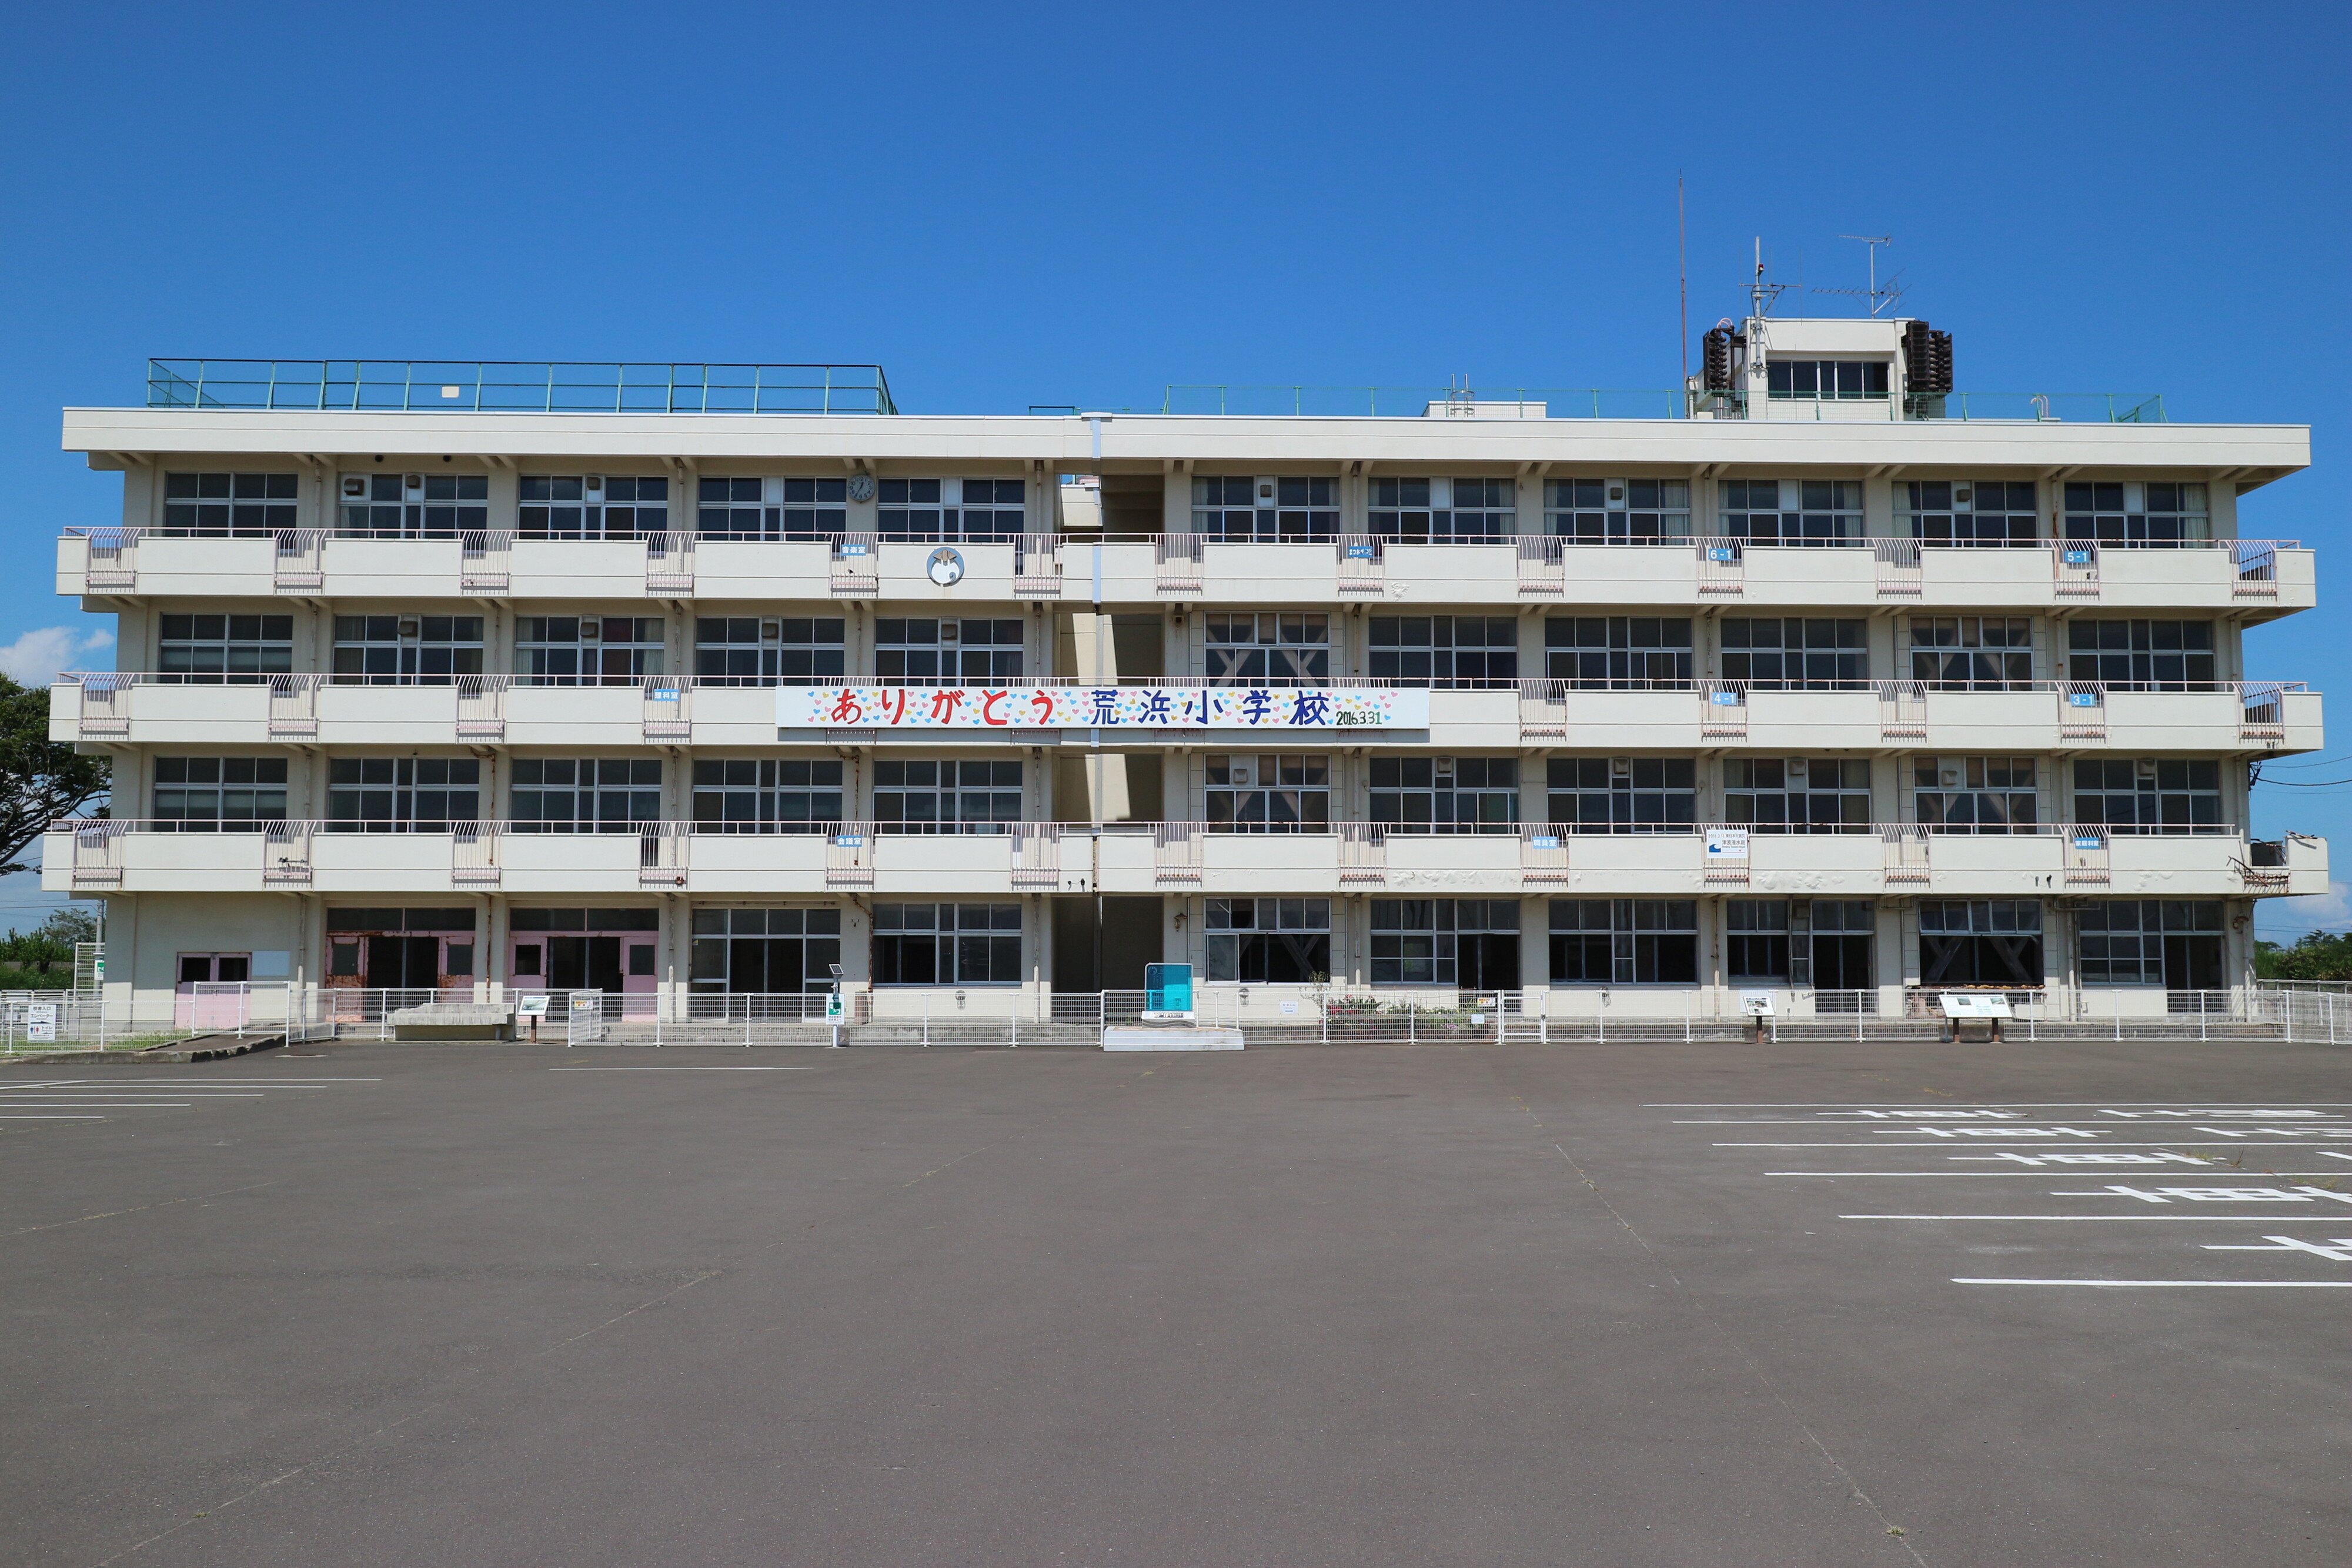 【PR】仙台 |「震災遺構 仙台市立荒浜小学校」を見学し震災を忘れない